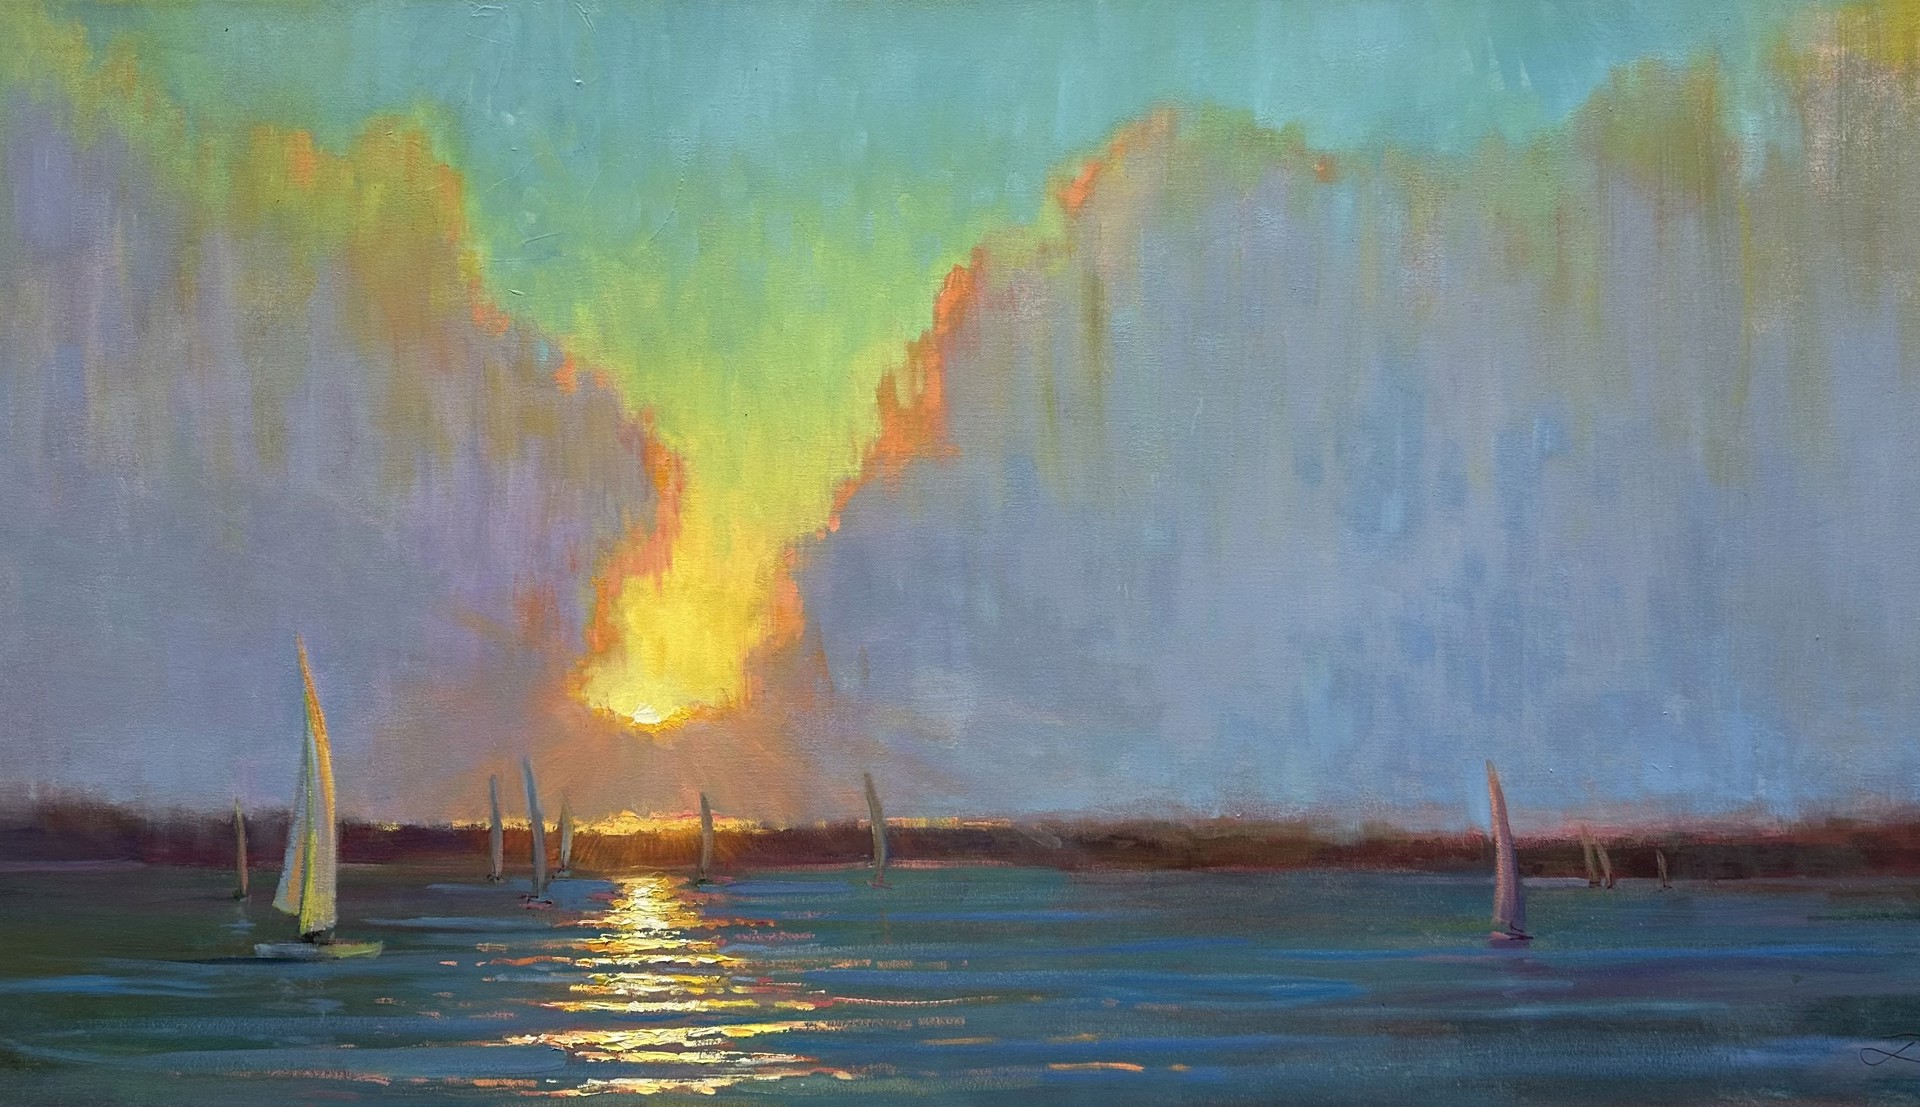 Sailing at Sunset by Linda Richichi